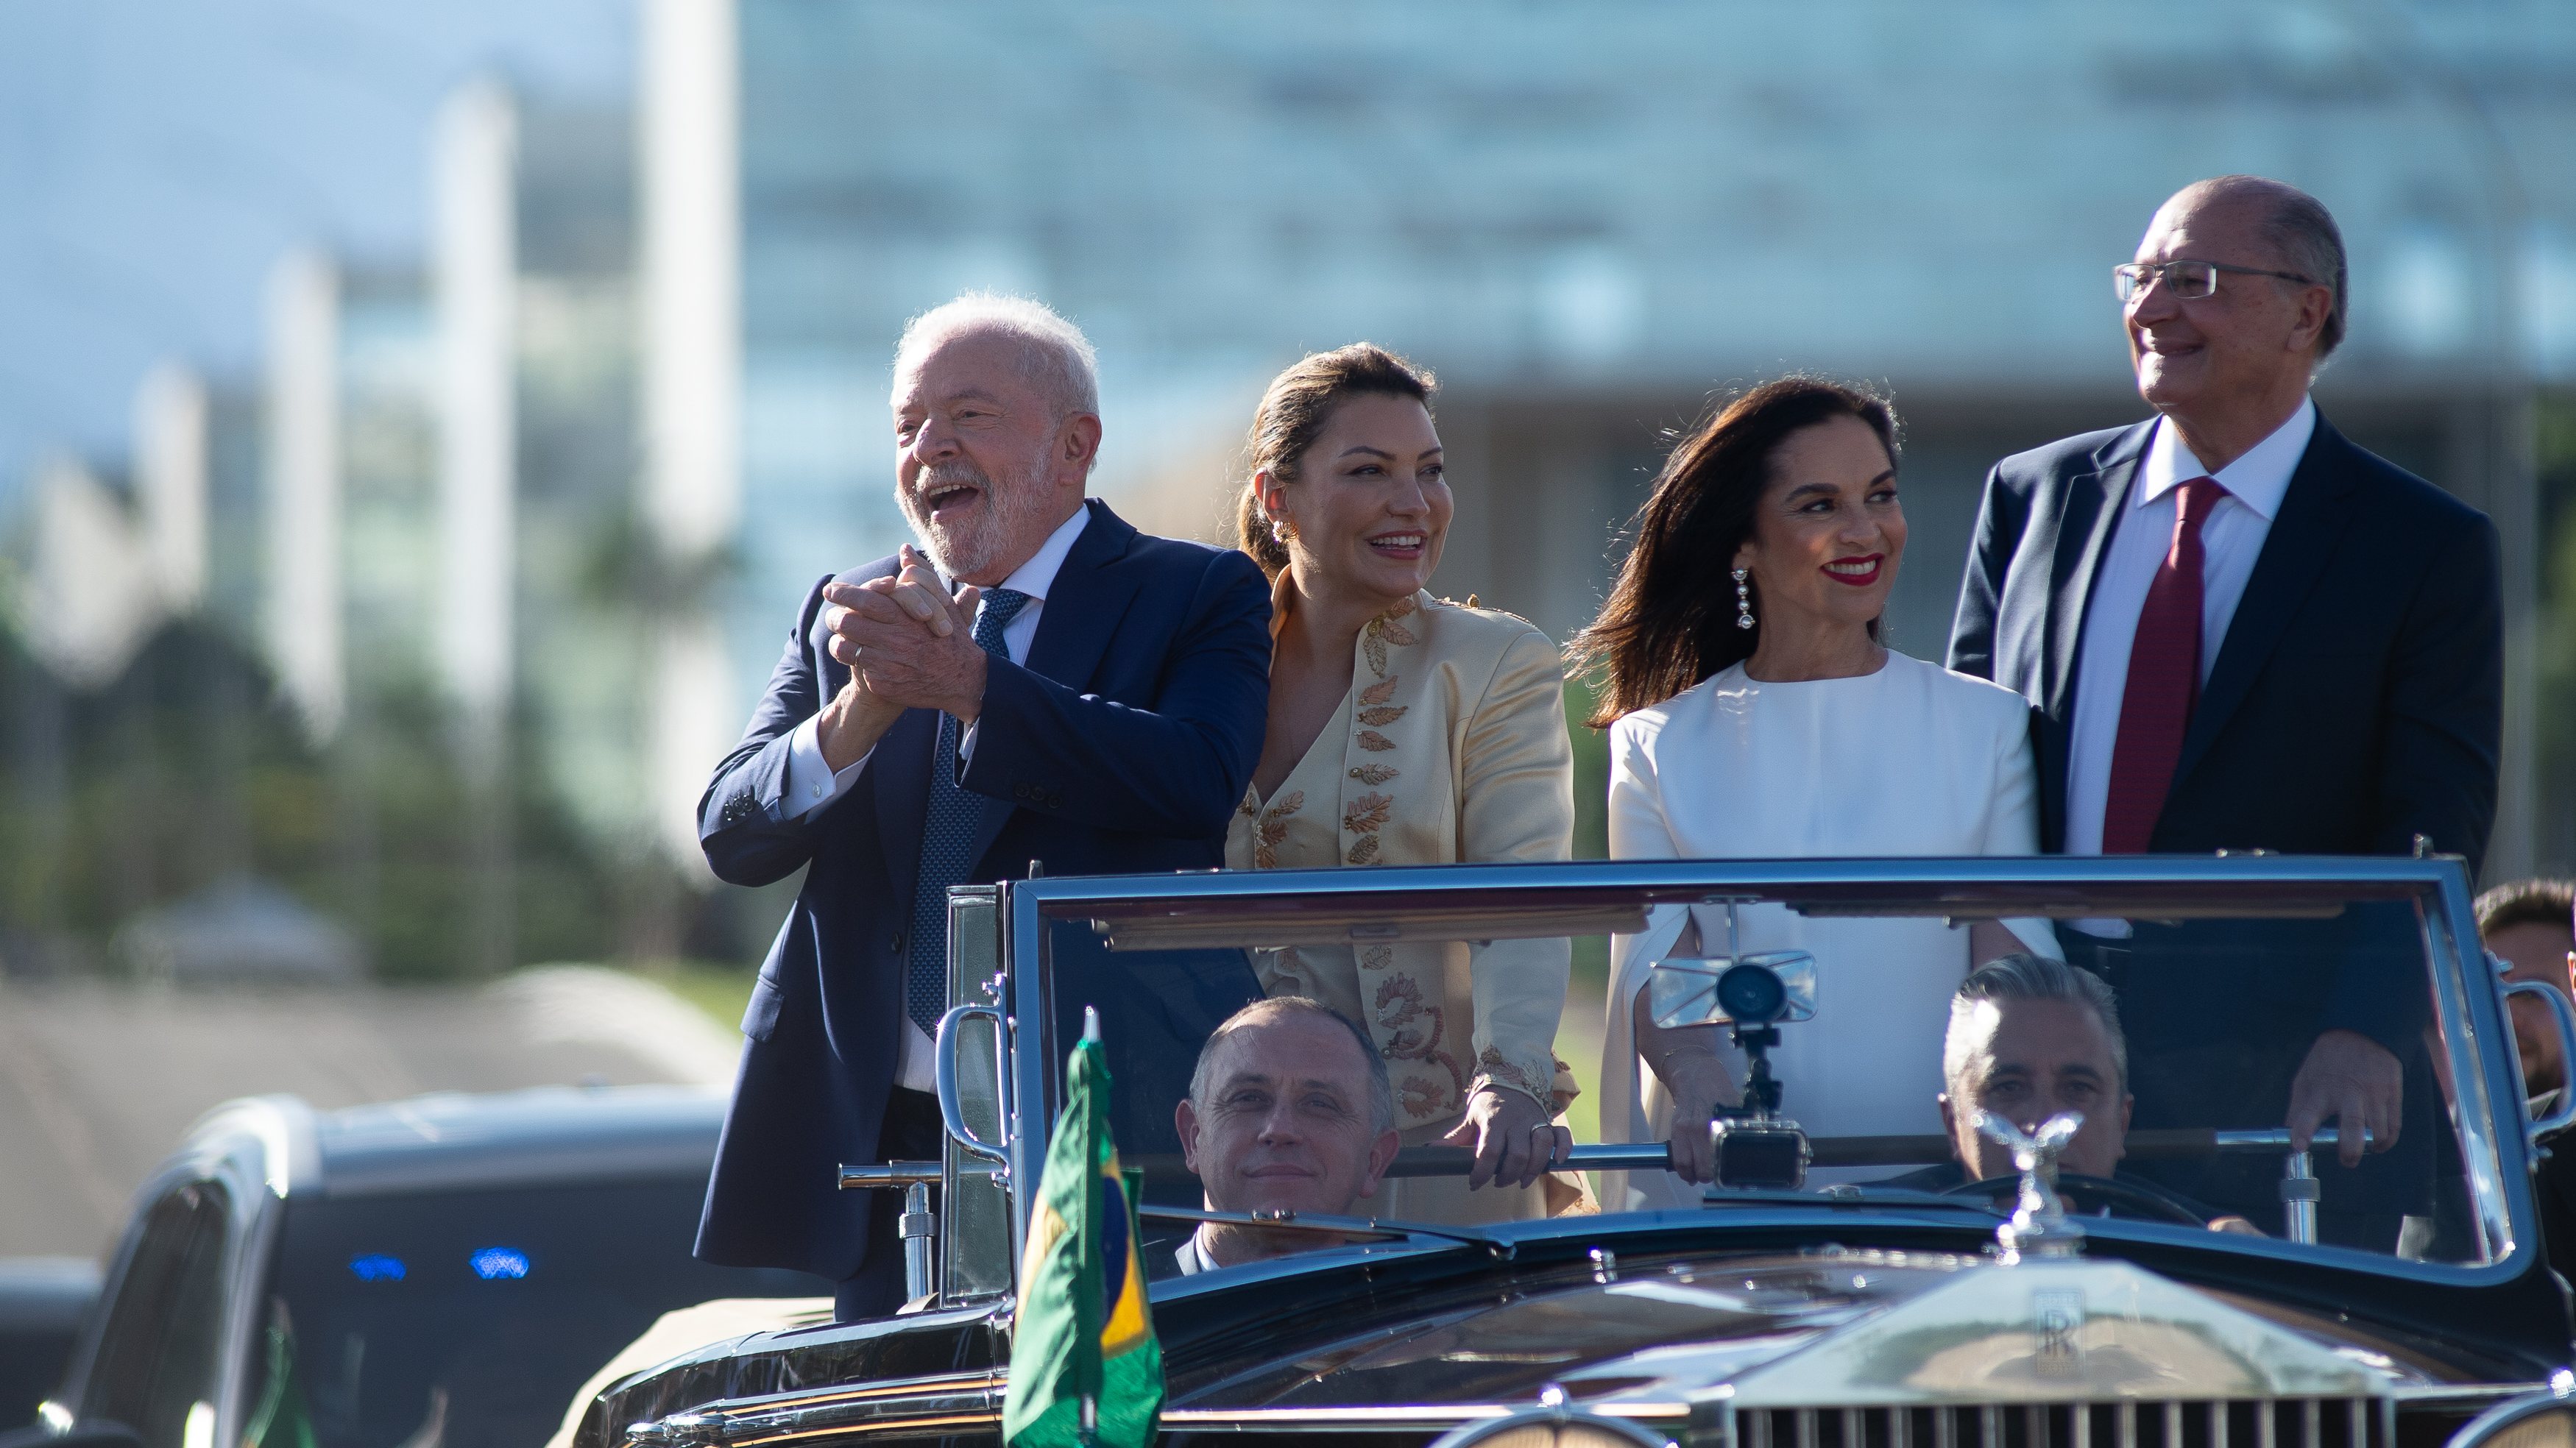 Inauguration of Lula Da Silva as The 39th President of Brazil